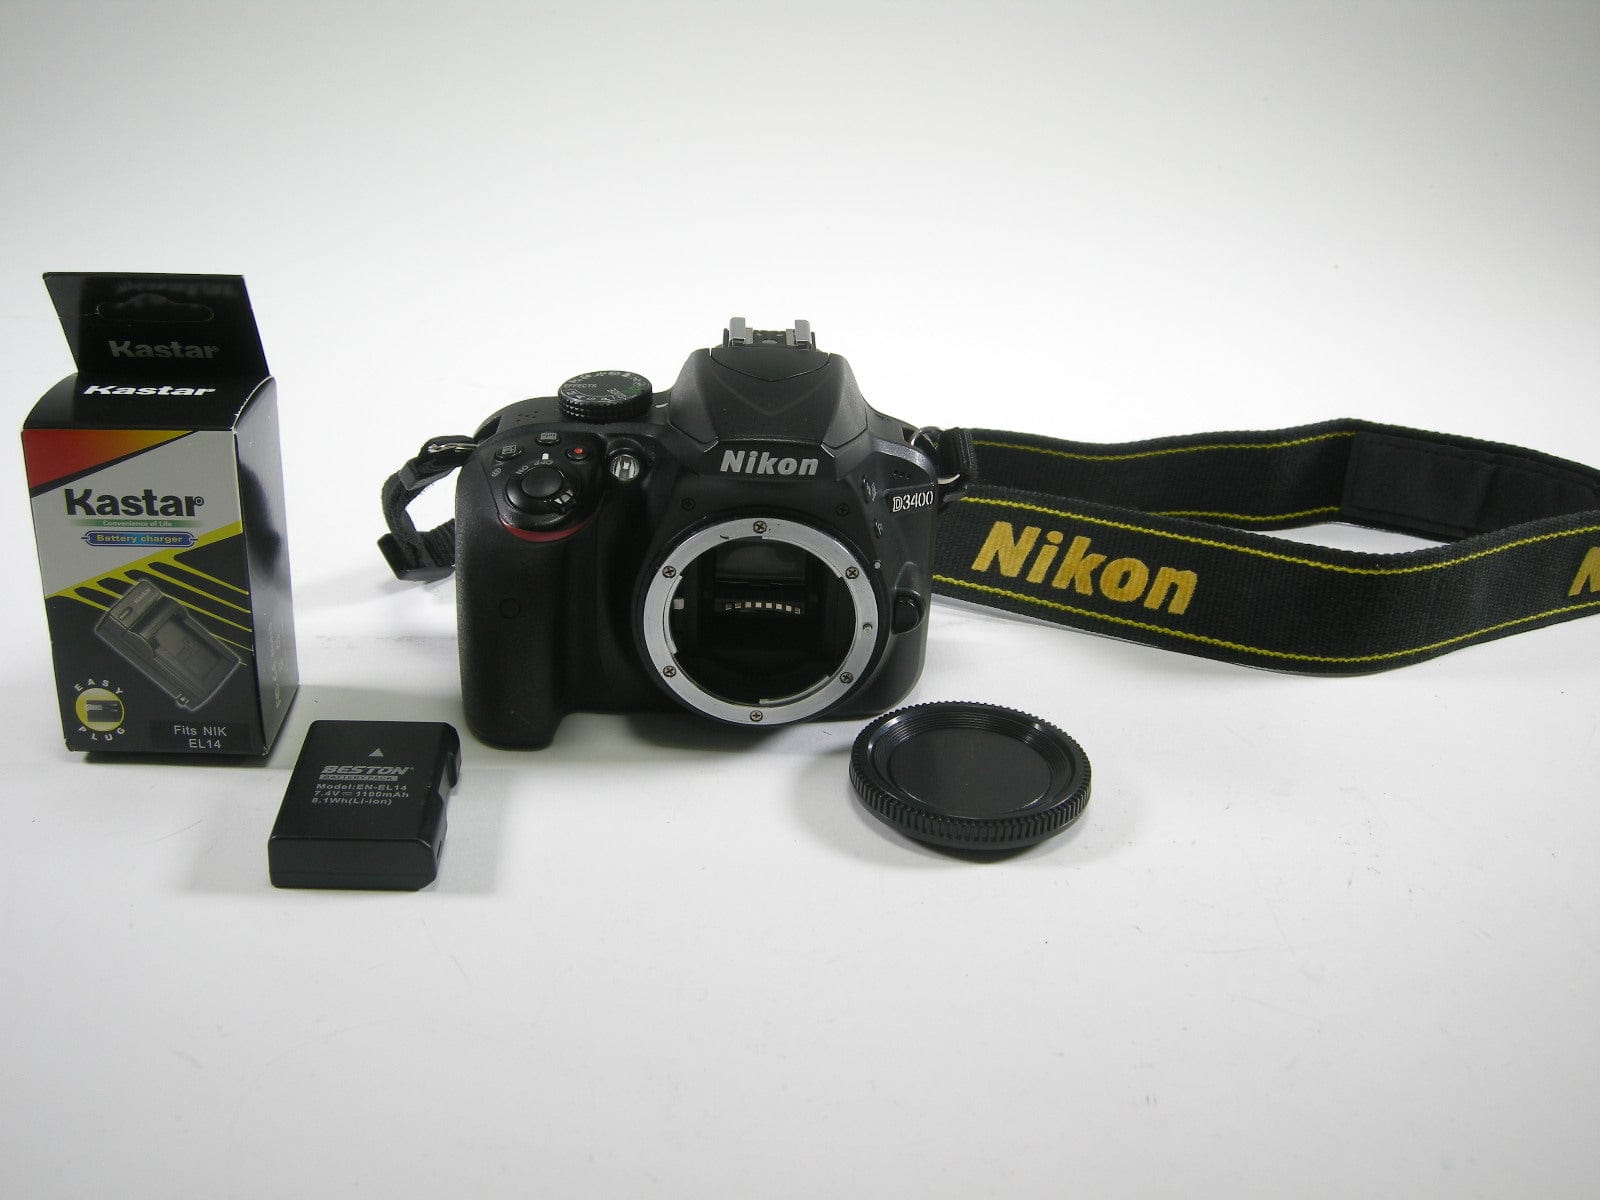 Nikon D3400 24.2MP Digital SLR Camera Body w/ Charger